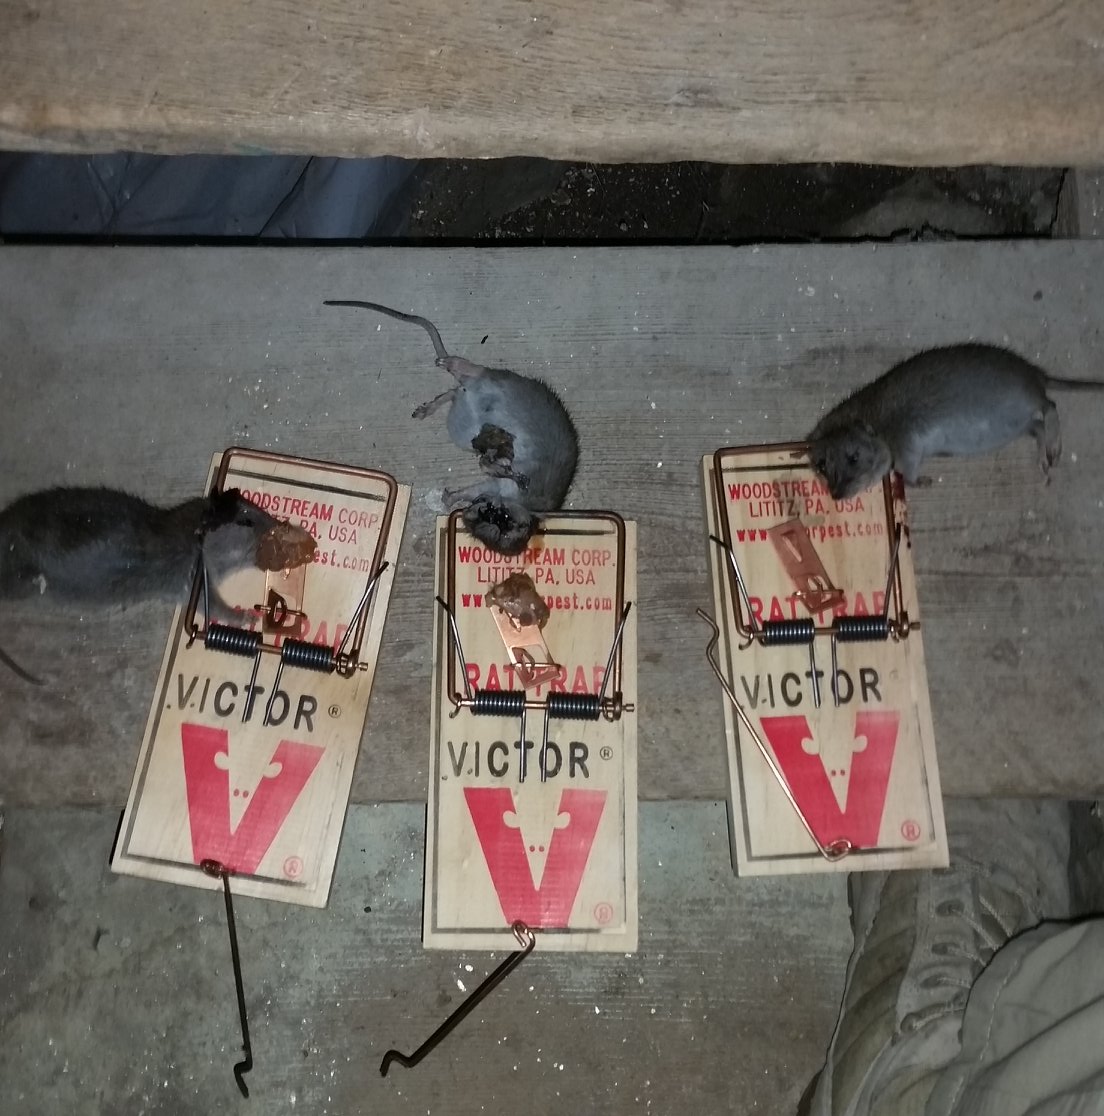 Rodent Control – C&C Wildlife Control